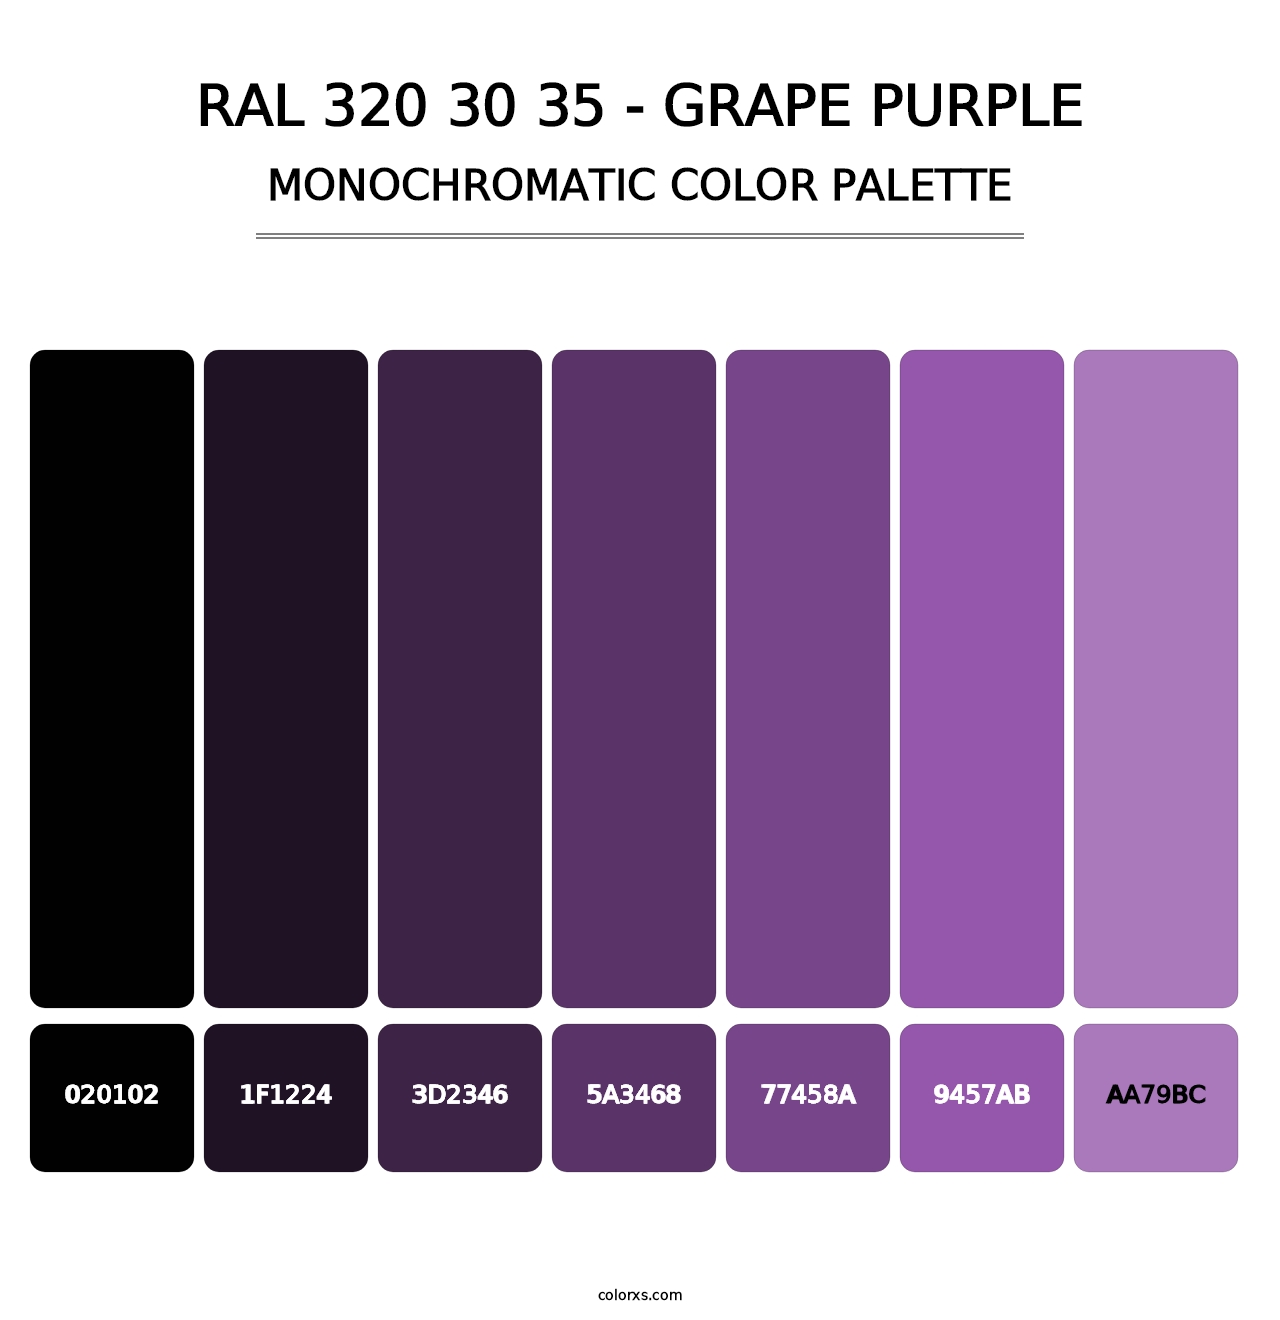 RAL 320 30 35 - Grape Purple - Monochromatic Color Palette